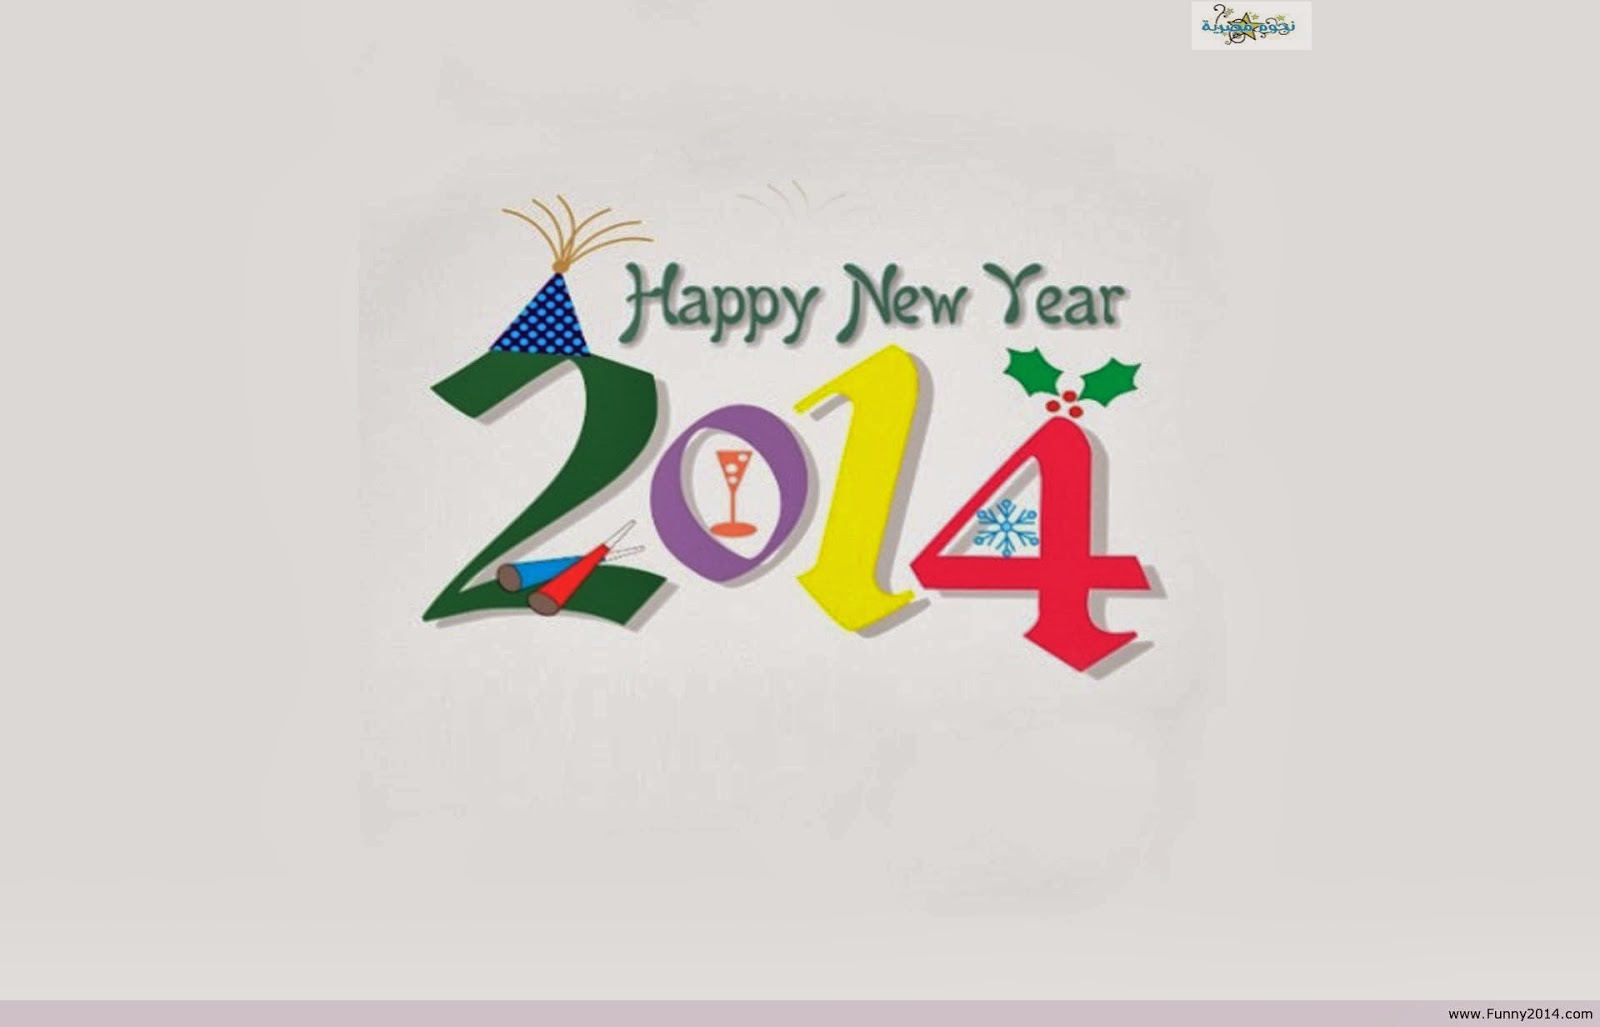    2014 ,    2014 ,happy new year 2014